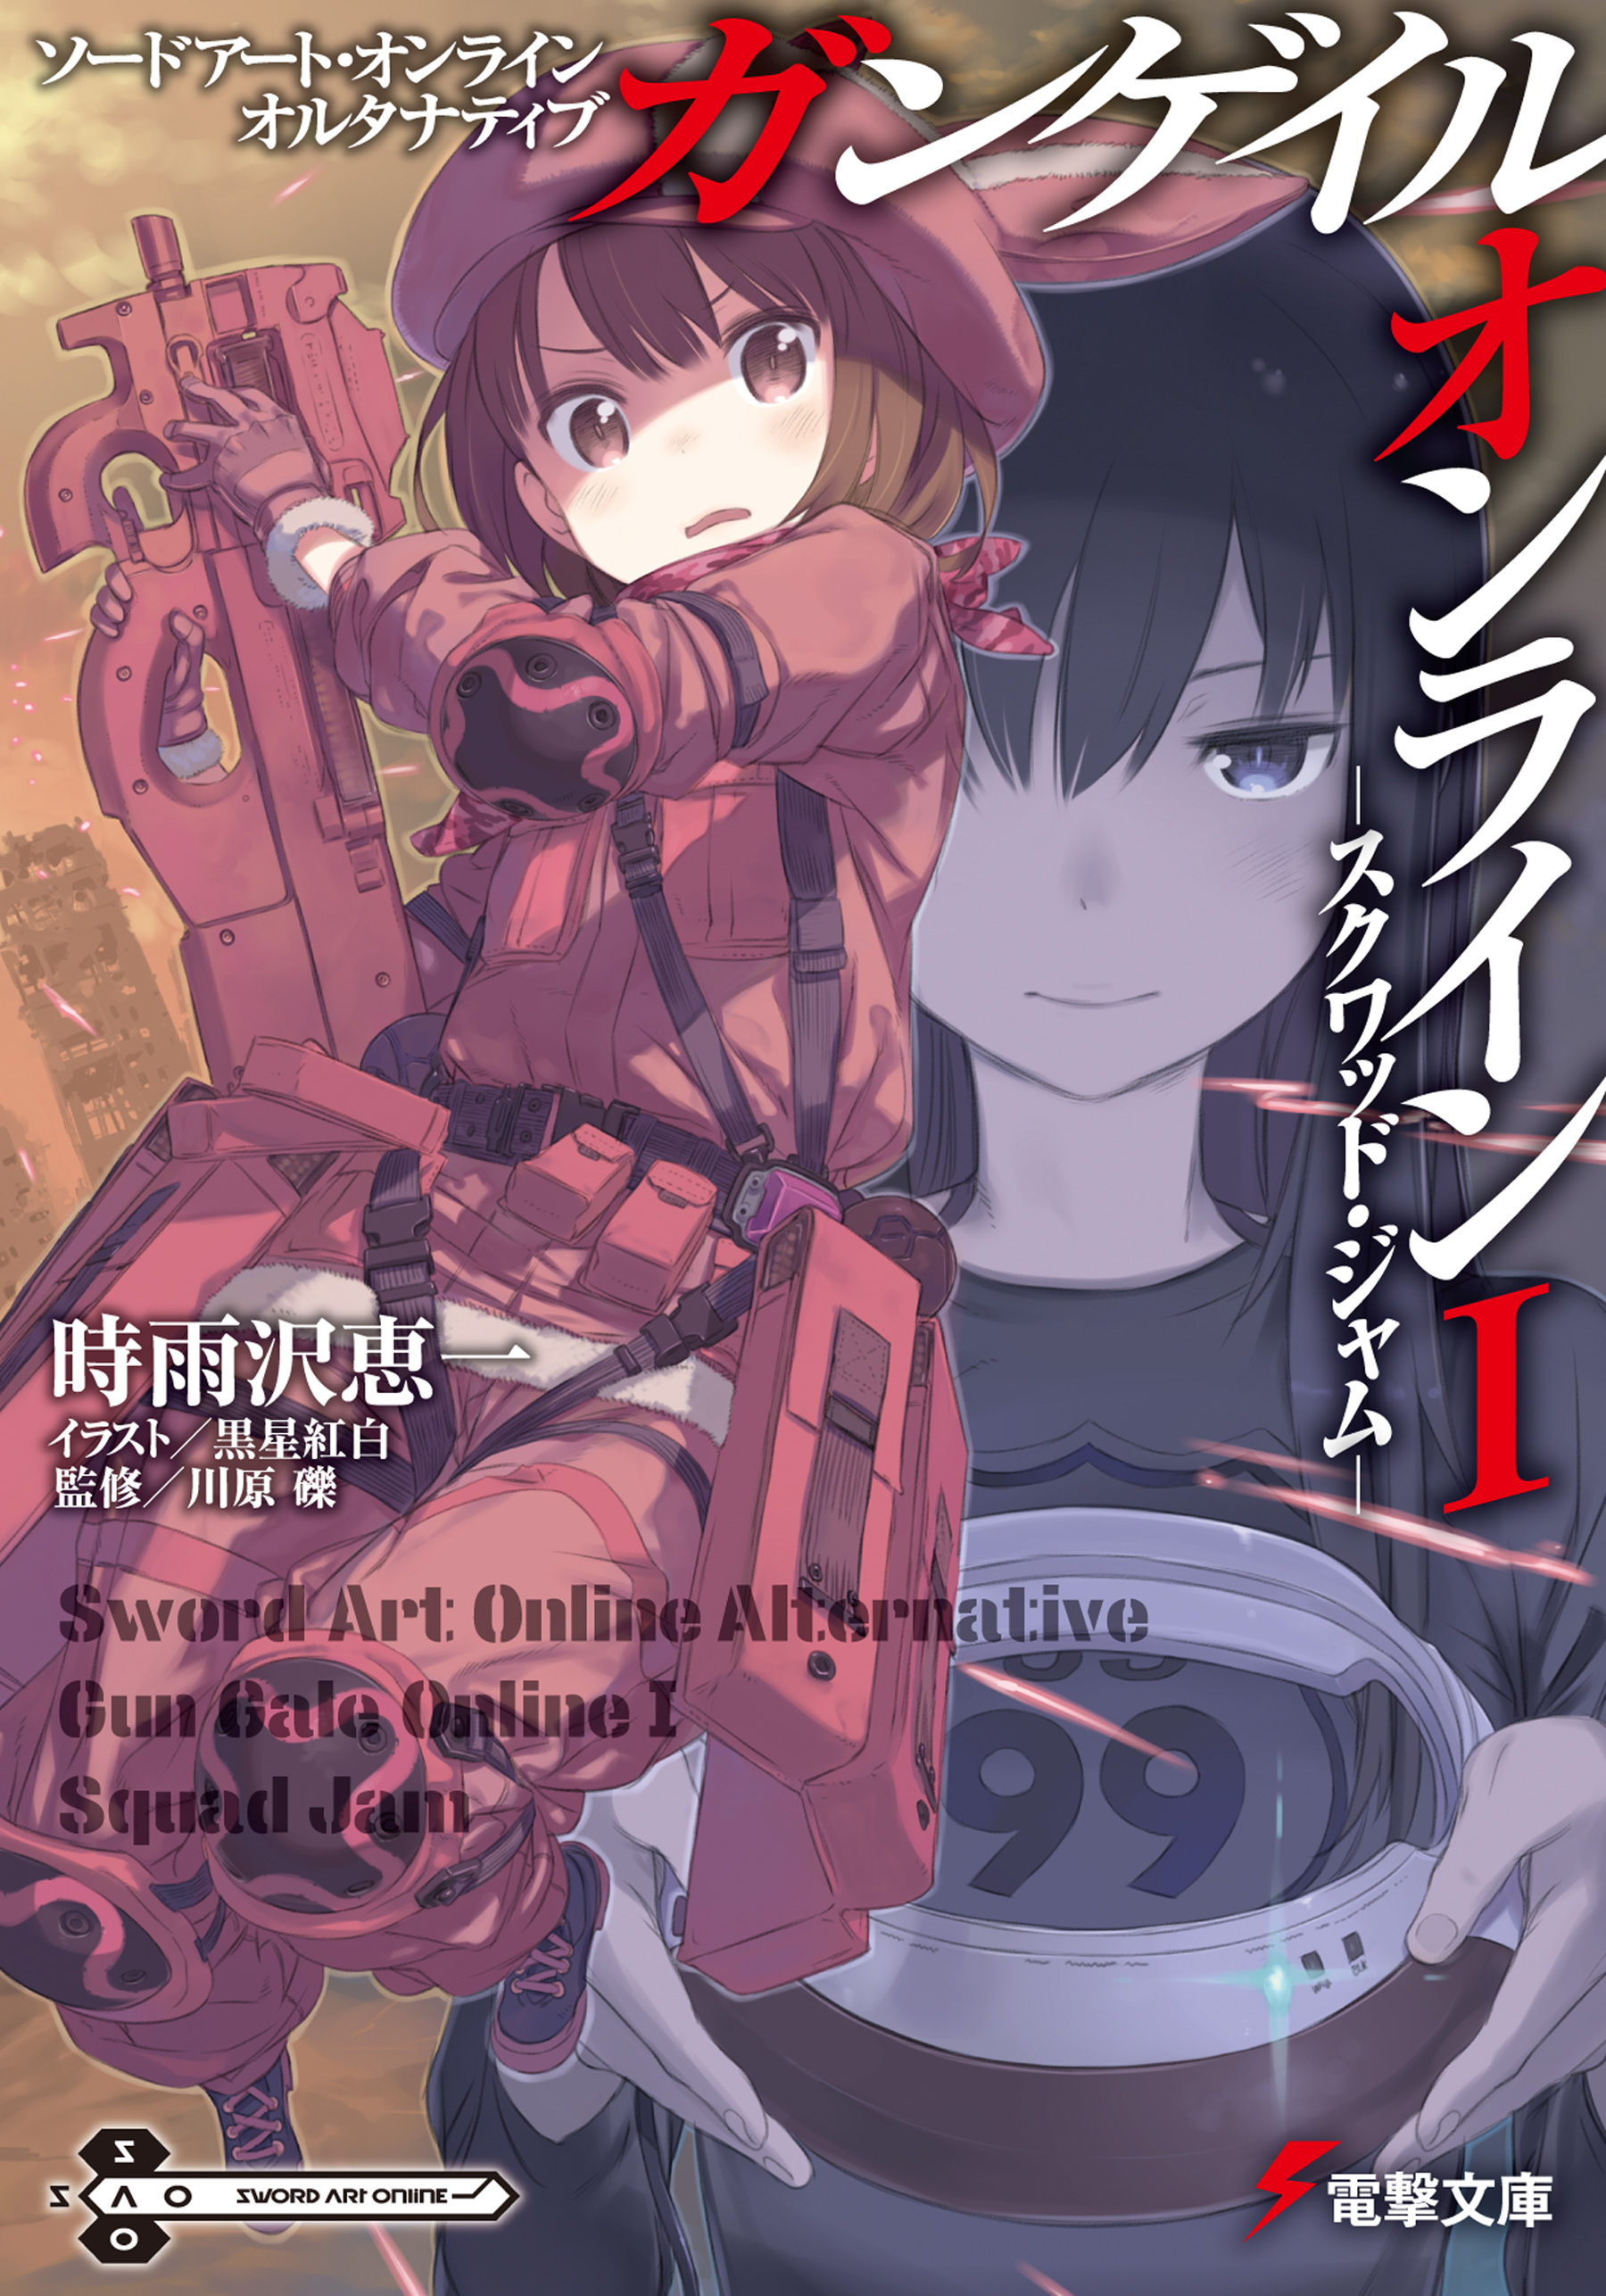 Sword Art Online - Ordinal Scale (manga), Sword Art Online Wiki